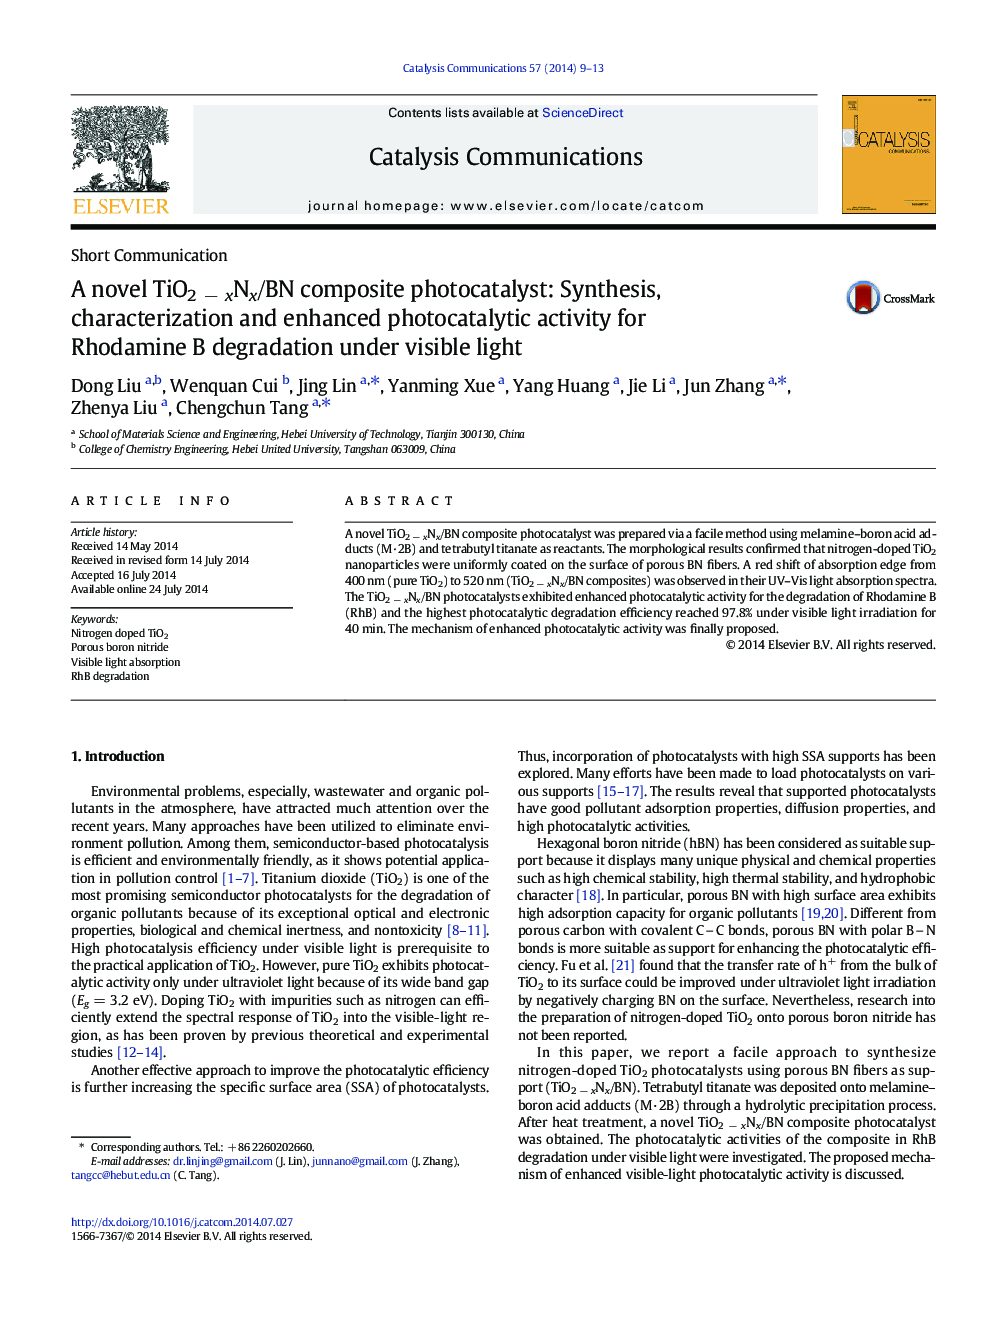 A novel TiO2 − xNx/BN composite photocatalyst: Synthesis, characterization and enhanced photocatalytic activity for Rhodamine B degradation under visible light